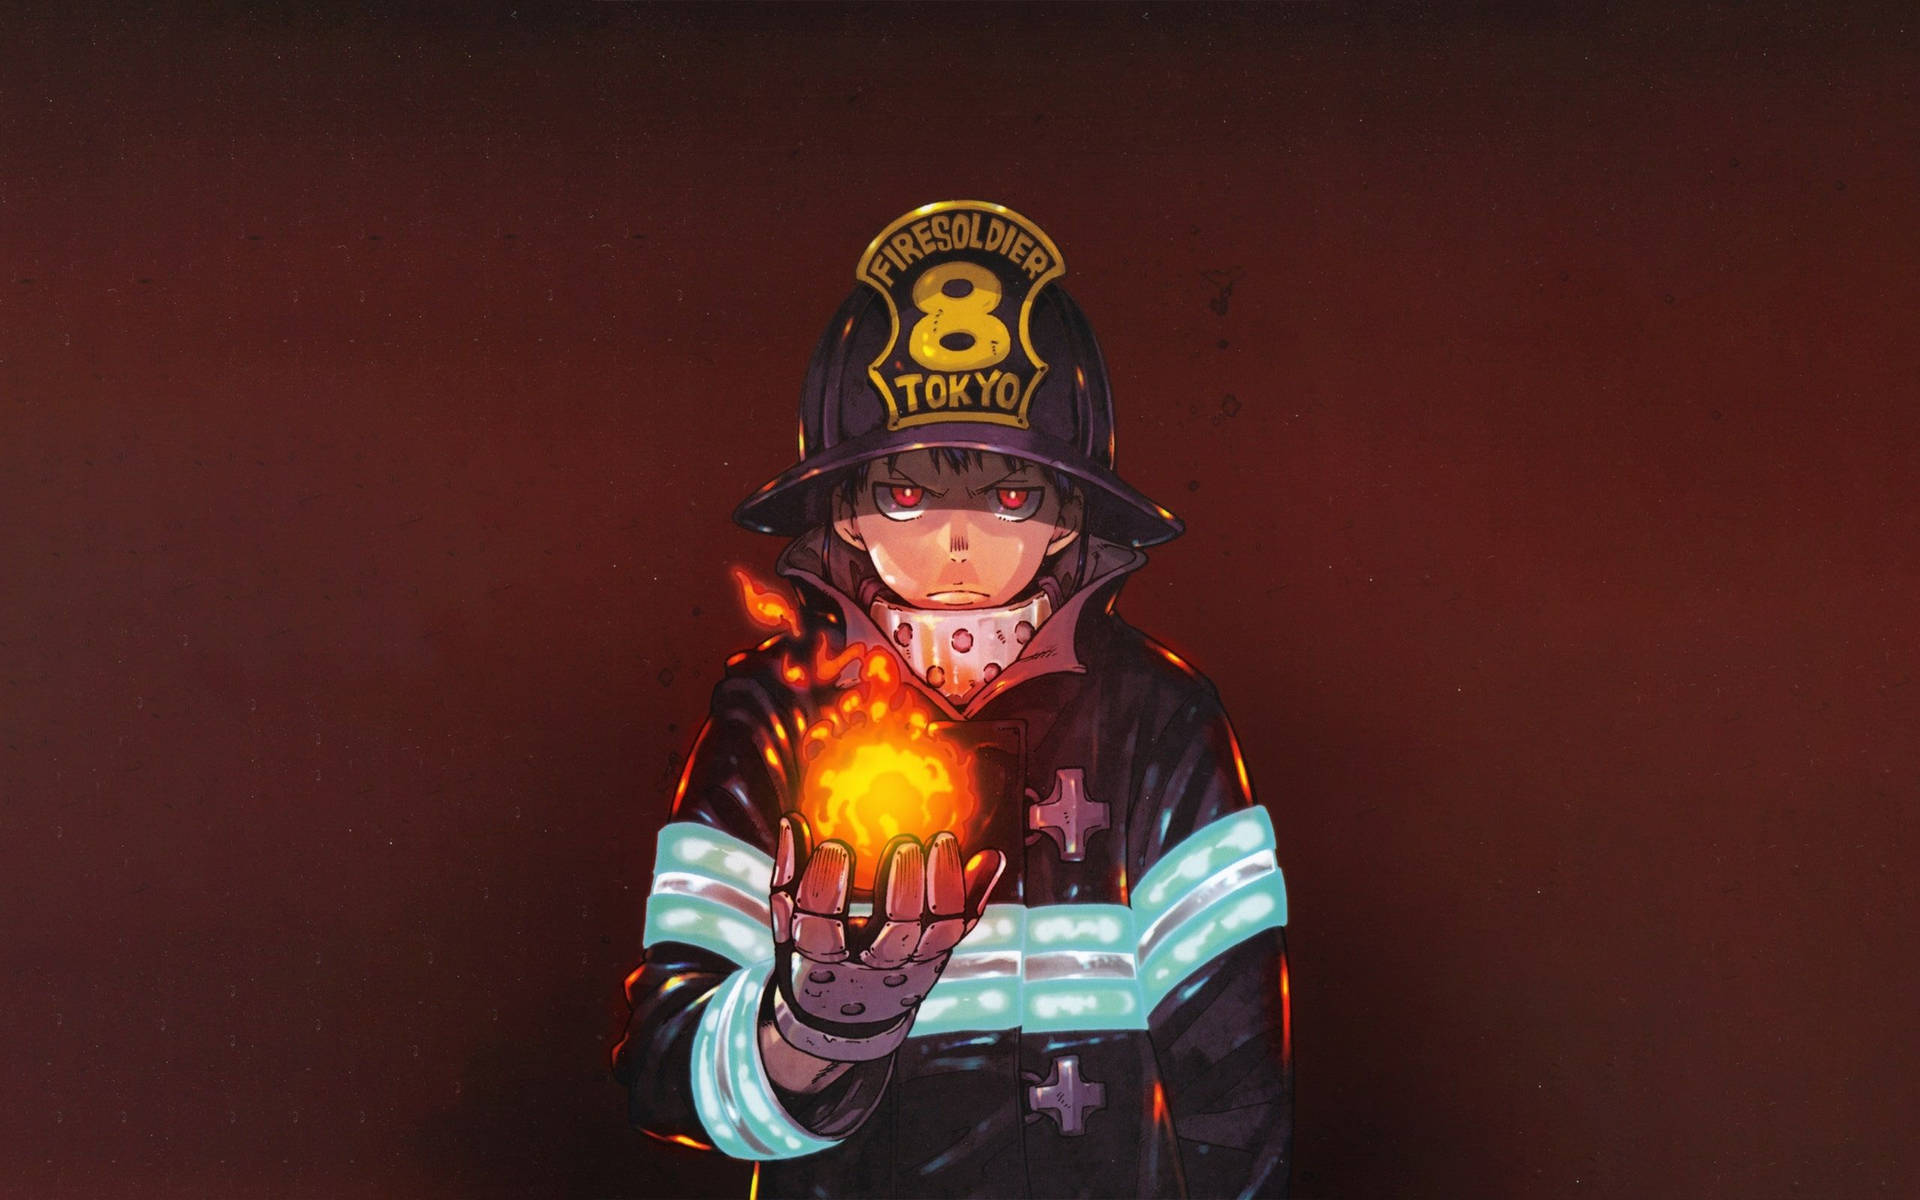 Shinra Kusakabe Fire Anime Background